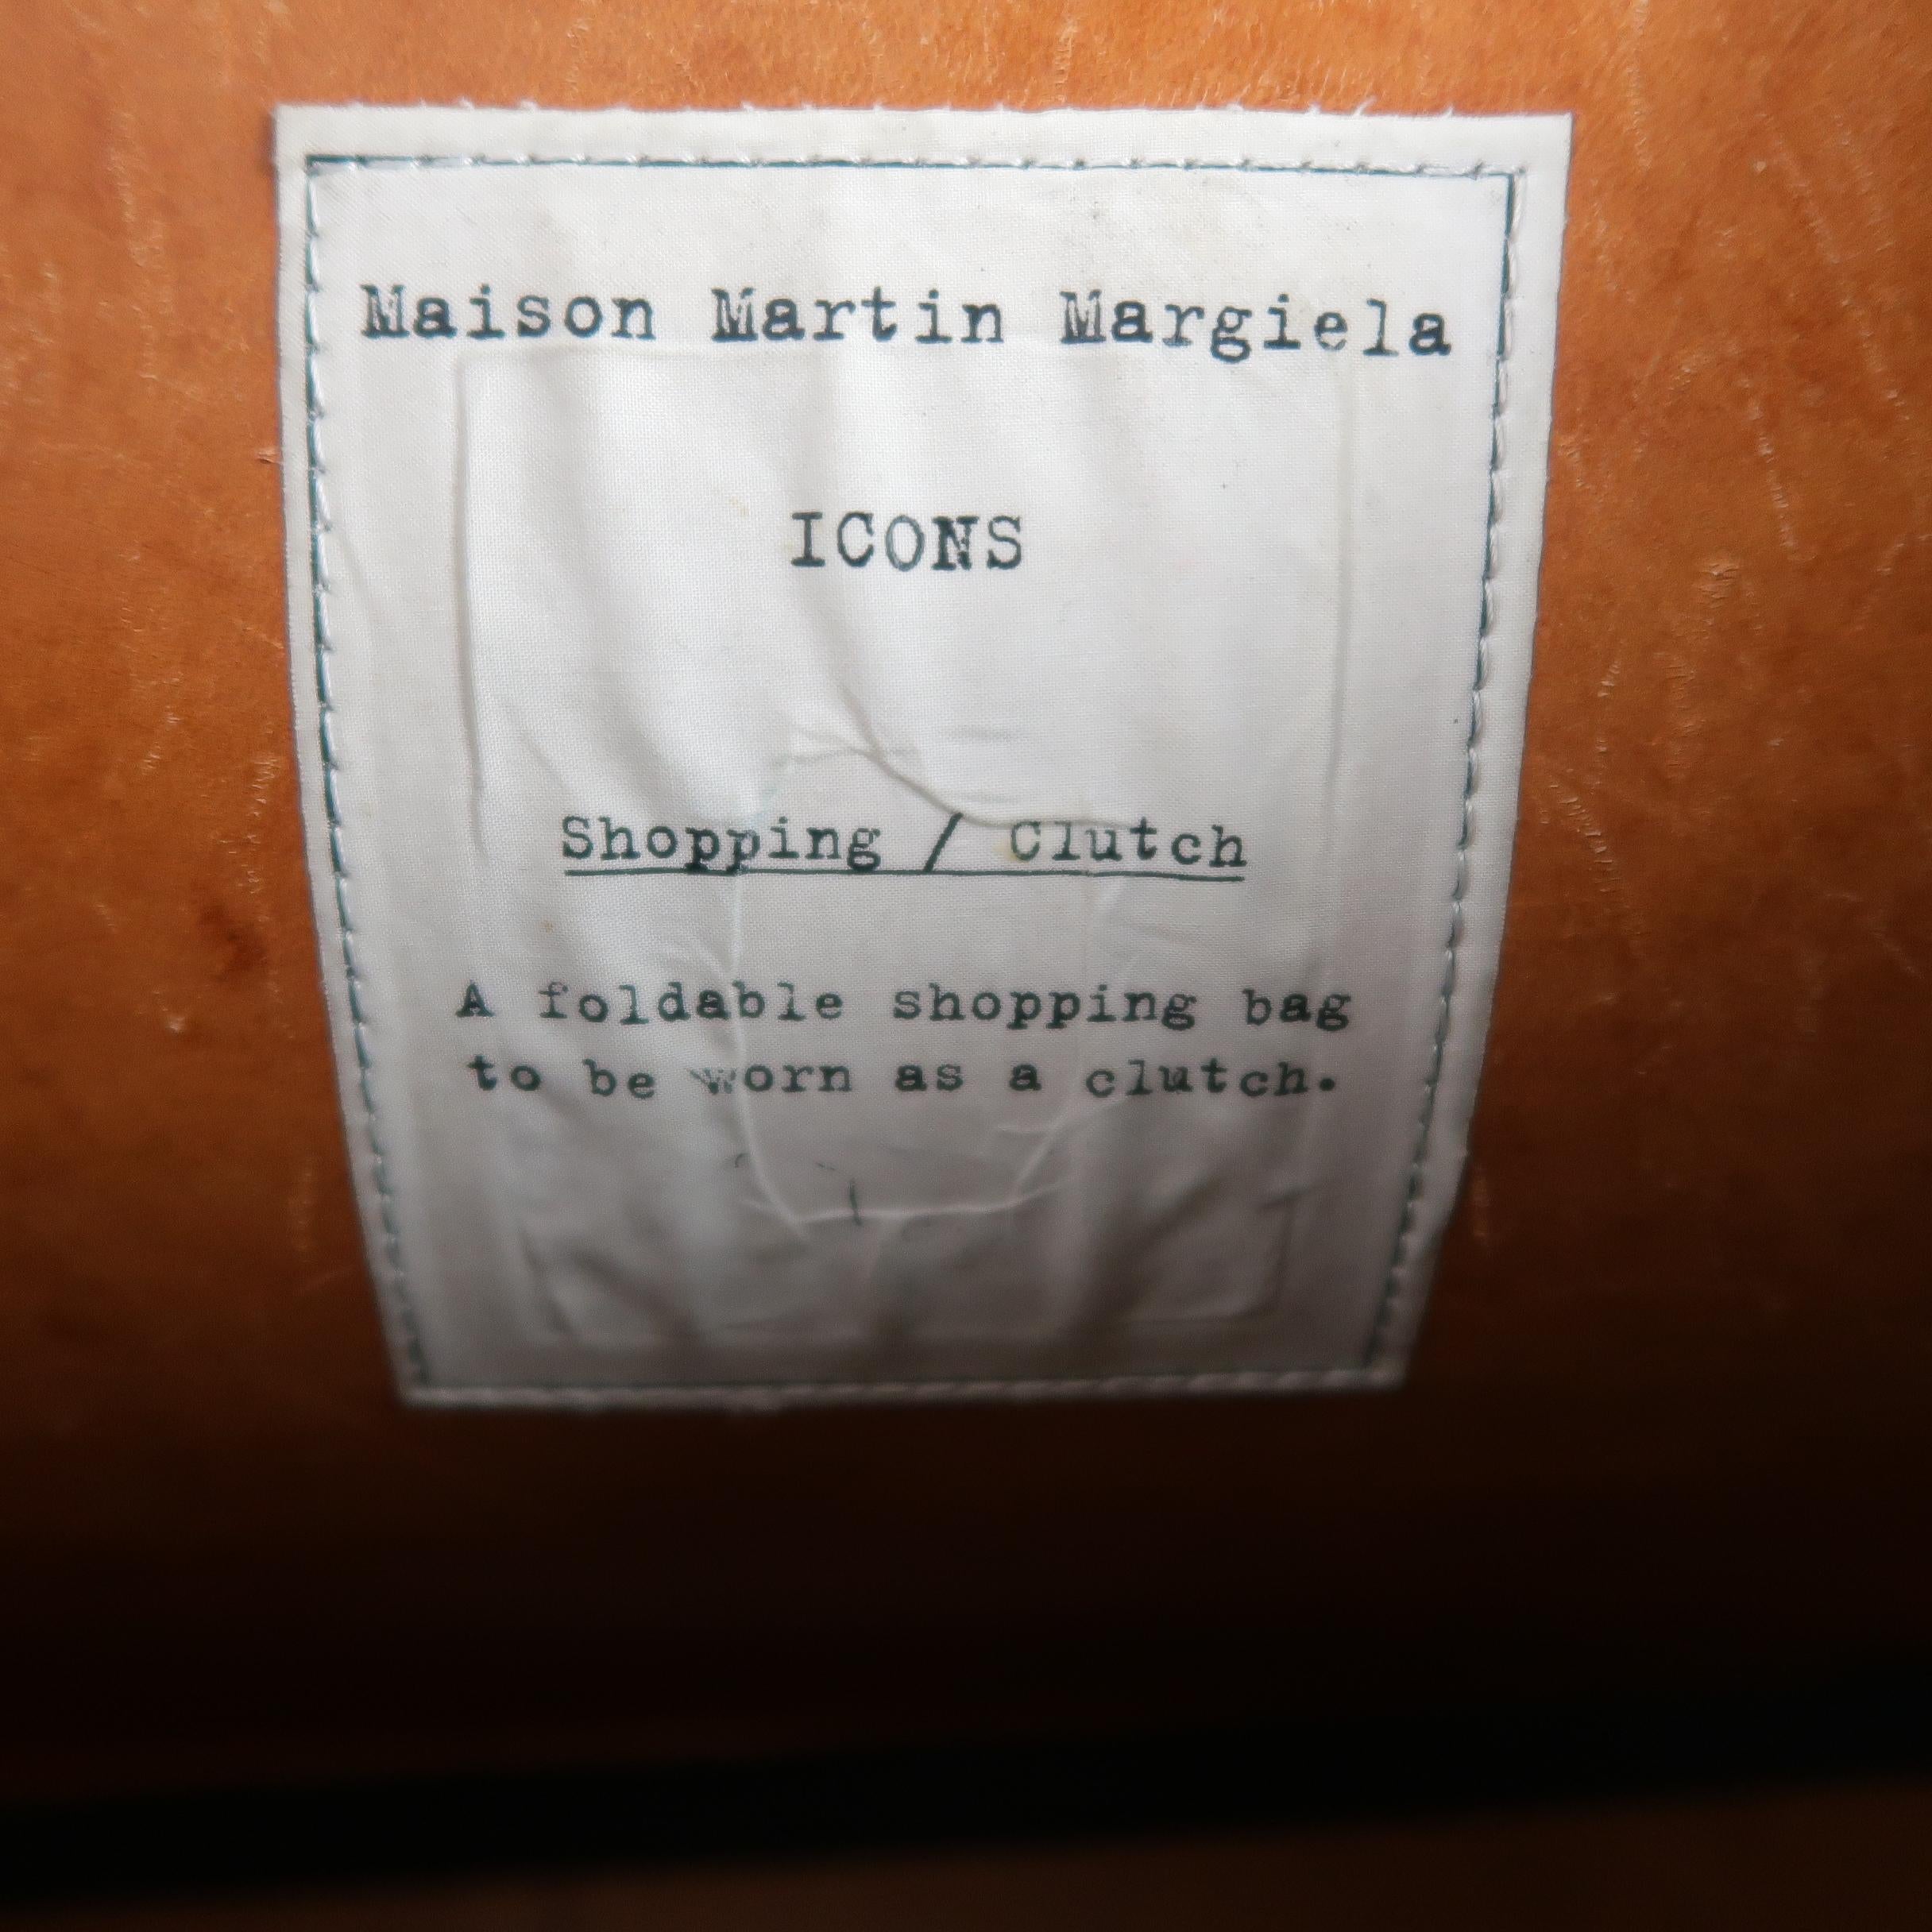 MAISON MARTIN MARGIELA Black Leather Icons Shopper / Clutch Tote Bag 9